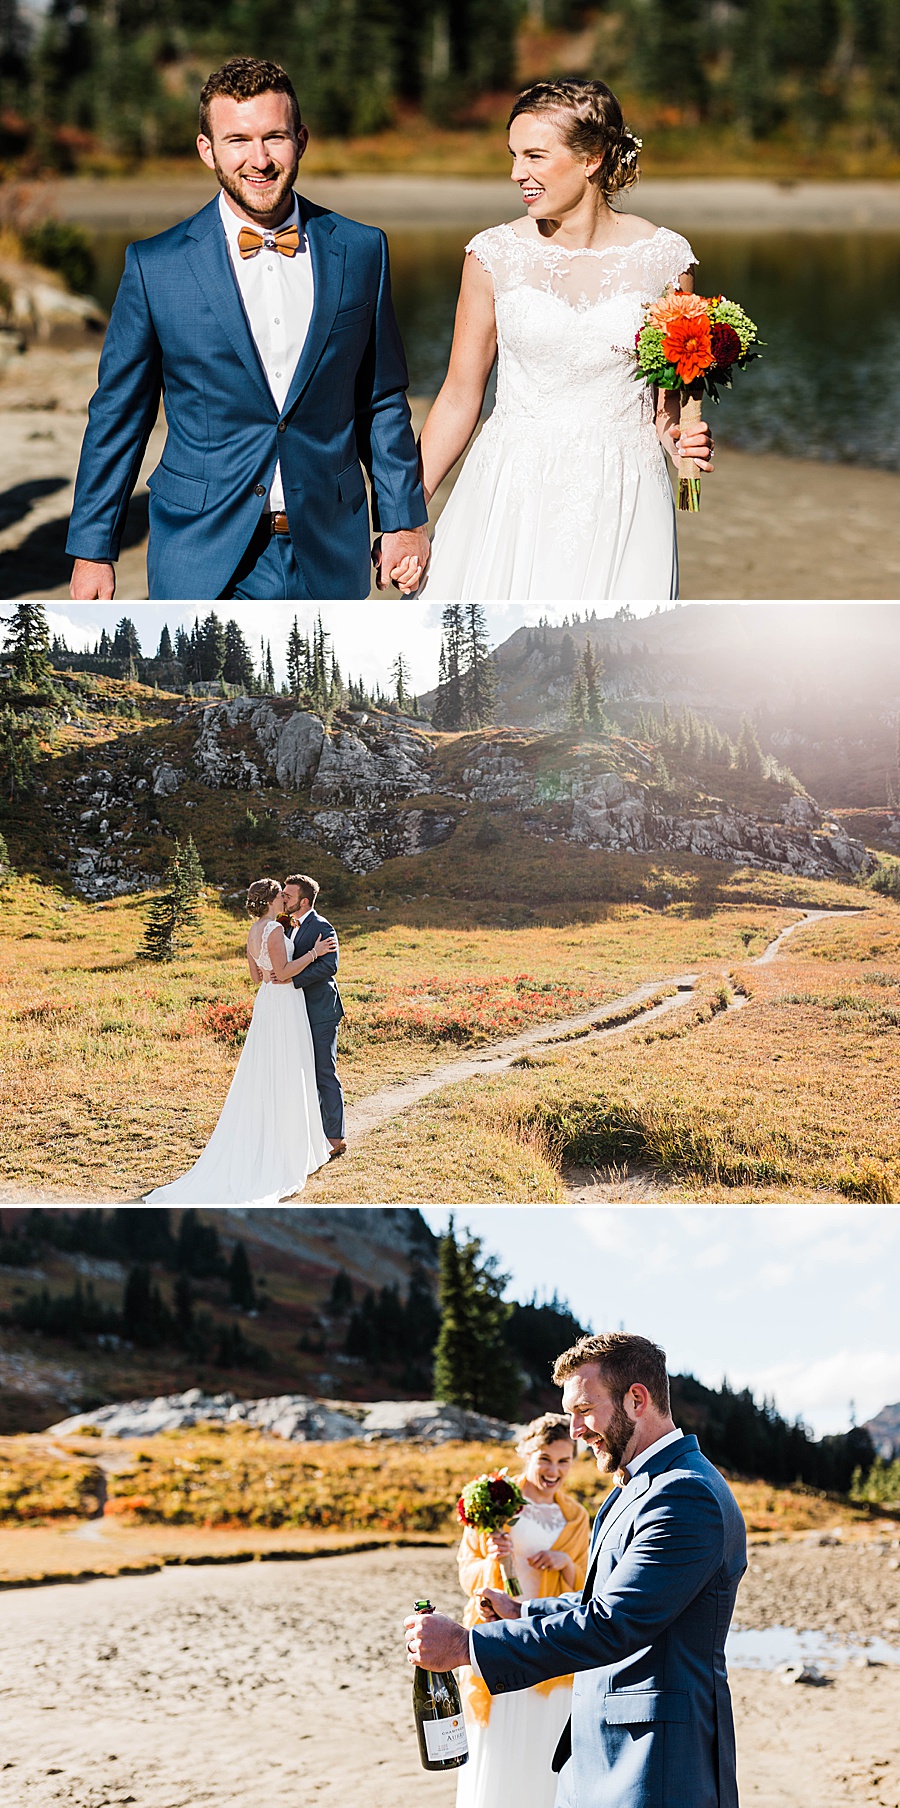 A bride and groom pop champagne at an alpine lake near Mt Rainier